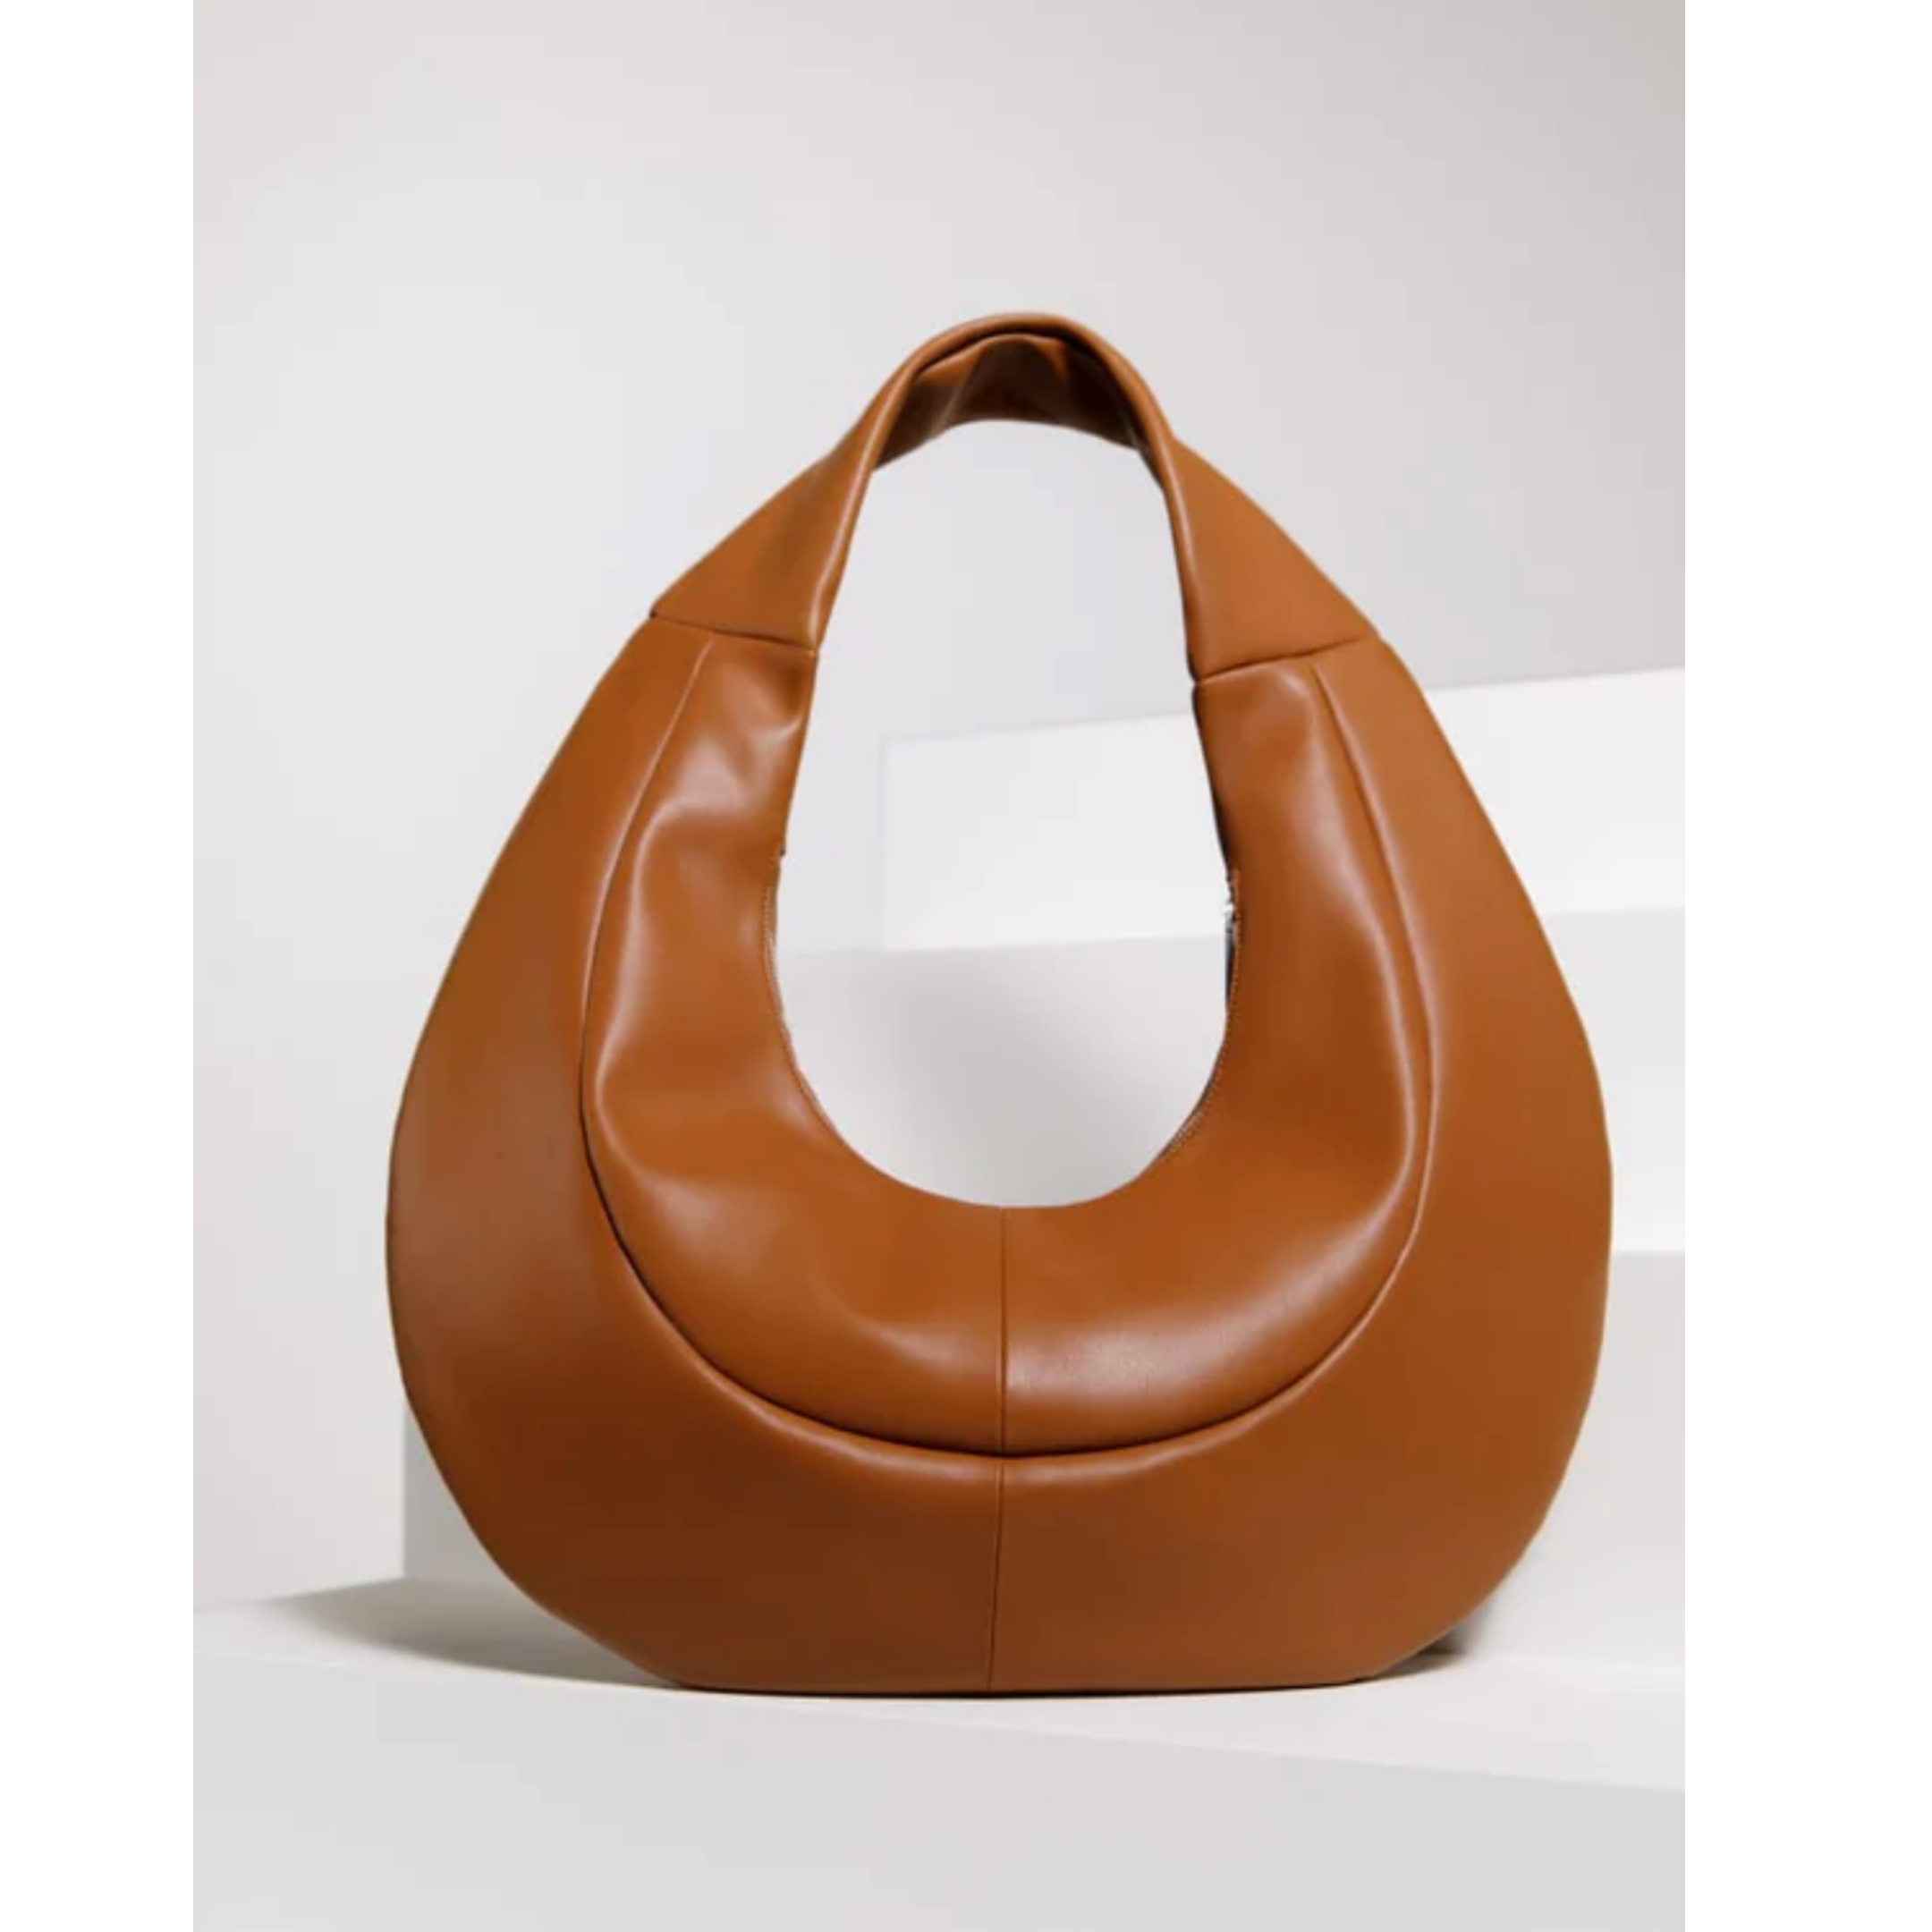 Melie Bianco Women's Johanna Shoulder Bag - Macy's